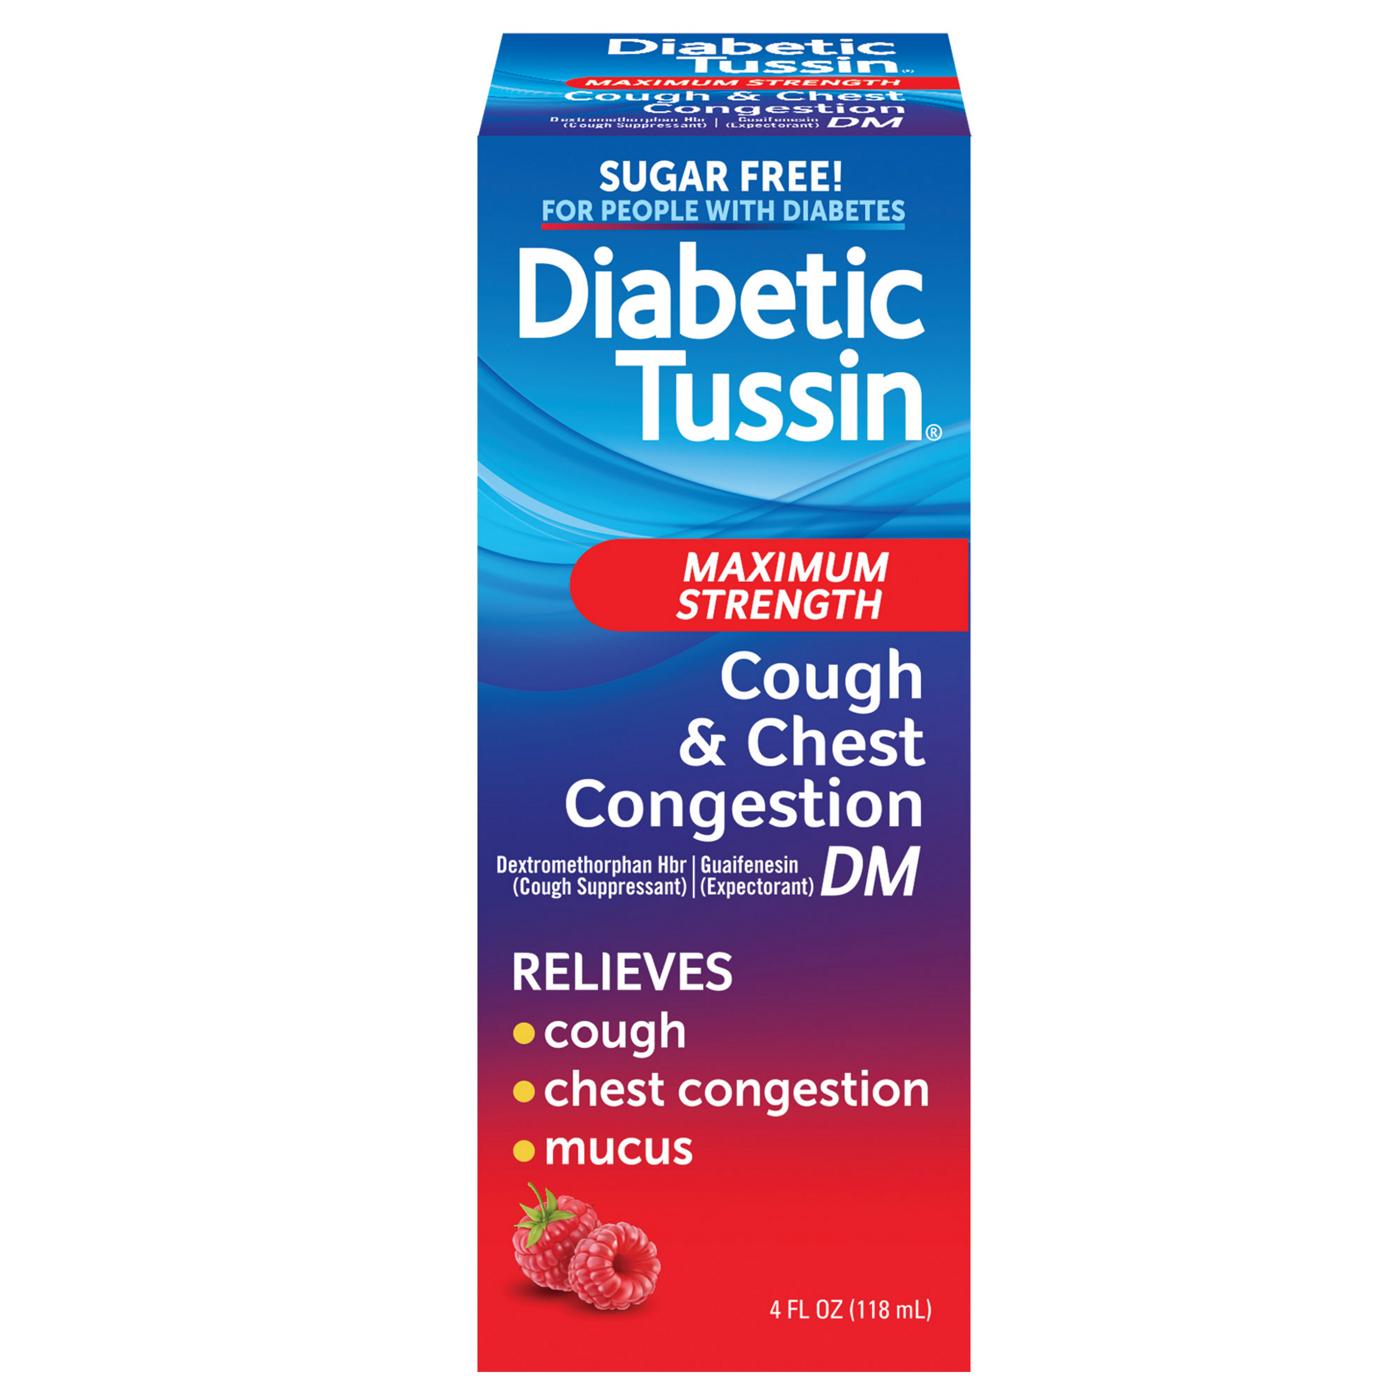 Diabetic Tussin Maximum Strength Cough & Chest DM - Berry; image 1 of 5